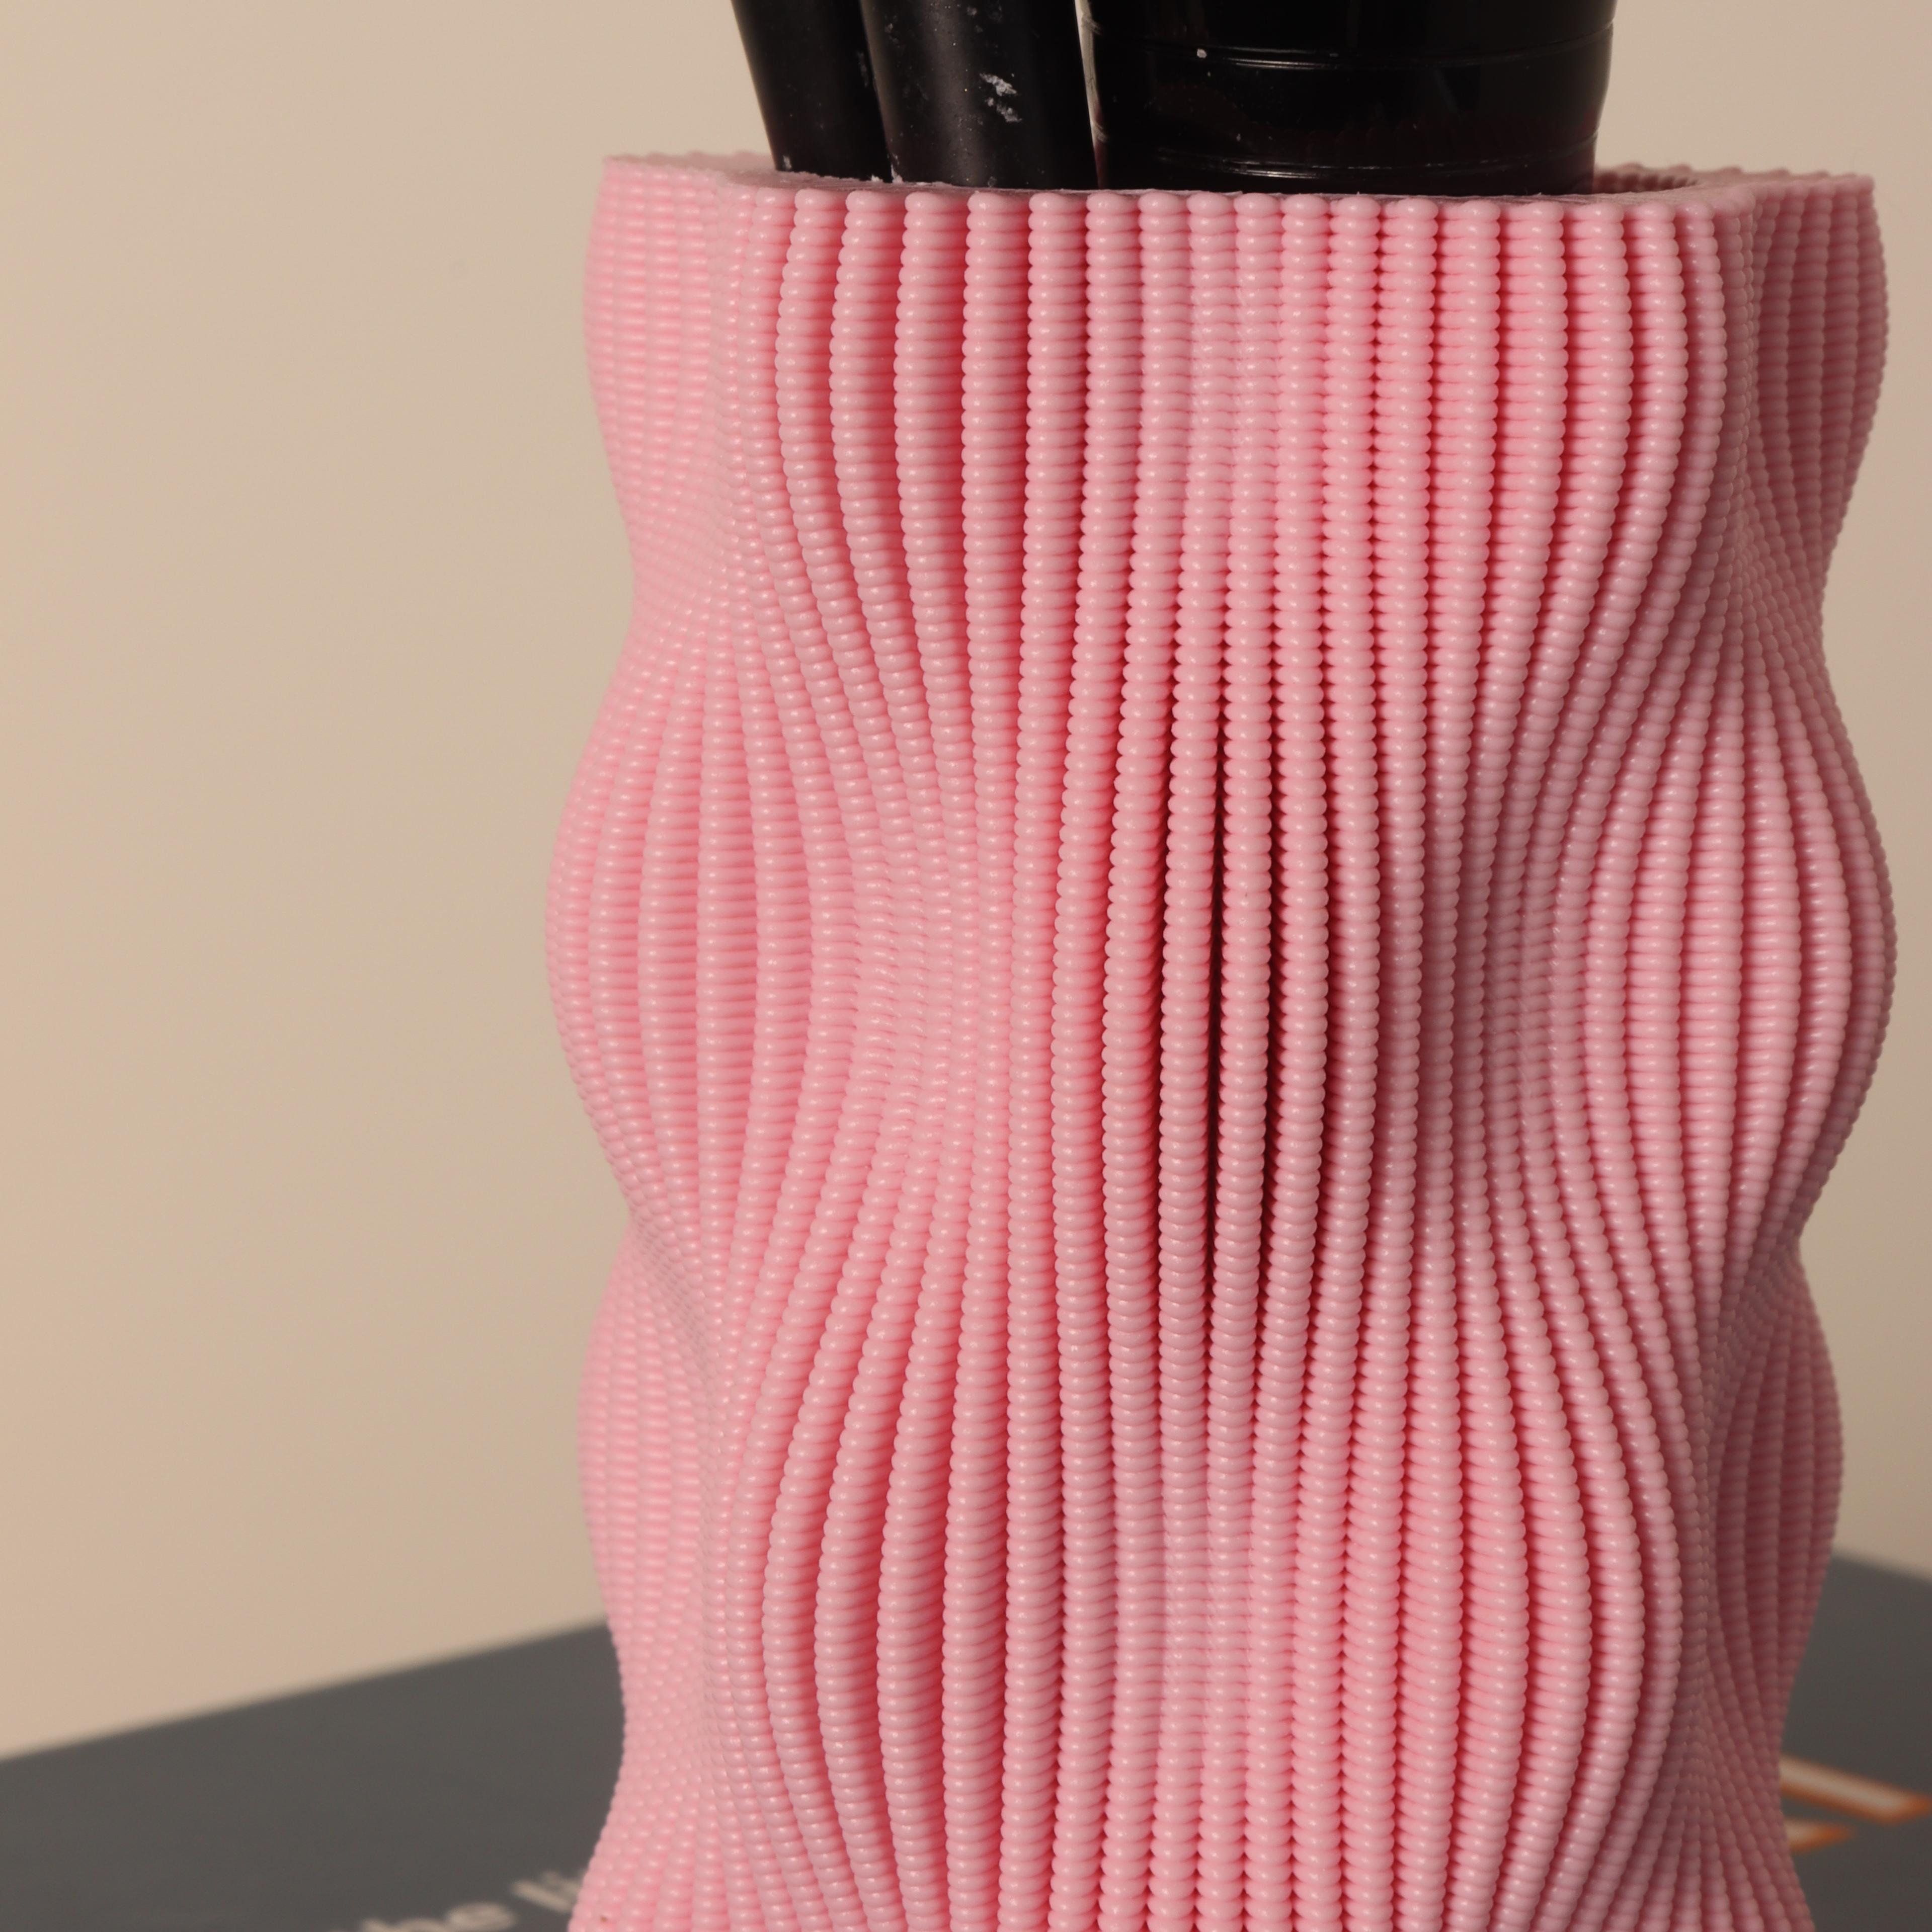 Mini Wavy Vase 3d model